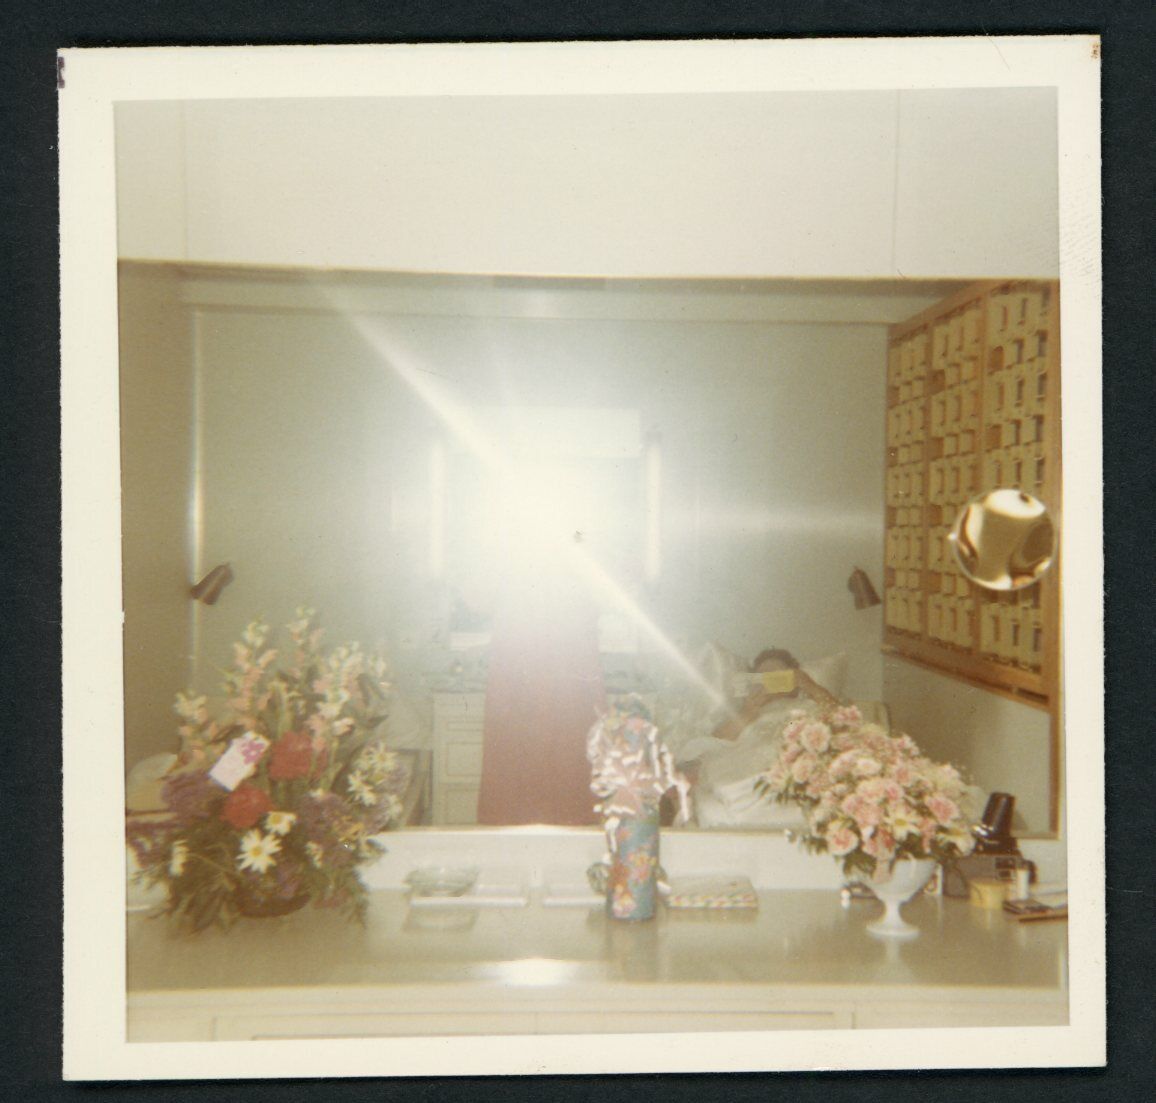 Mystery Figure Mirror Selfie Flash Glare Photo Snapshot 1960s Abstract Flowers